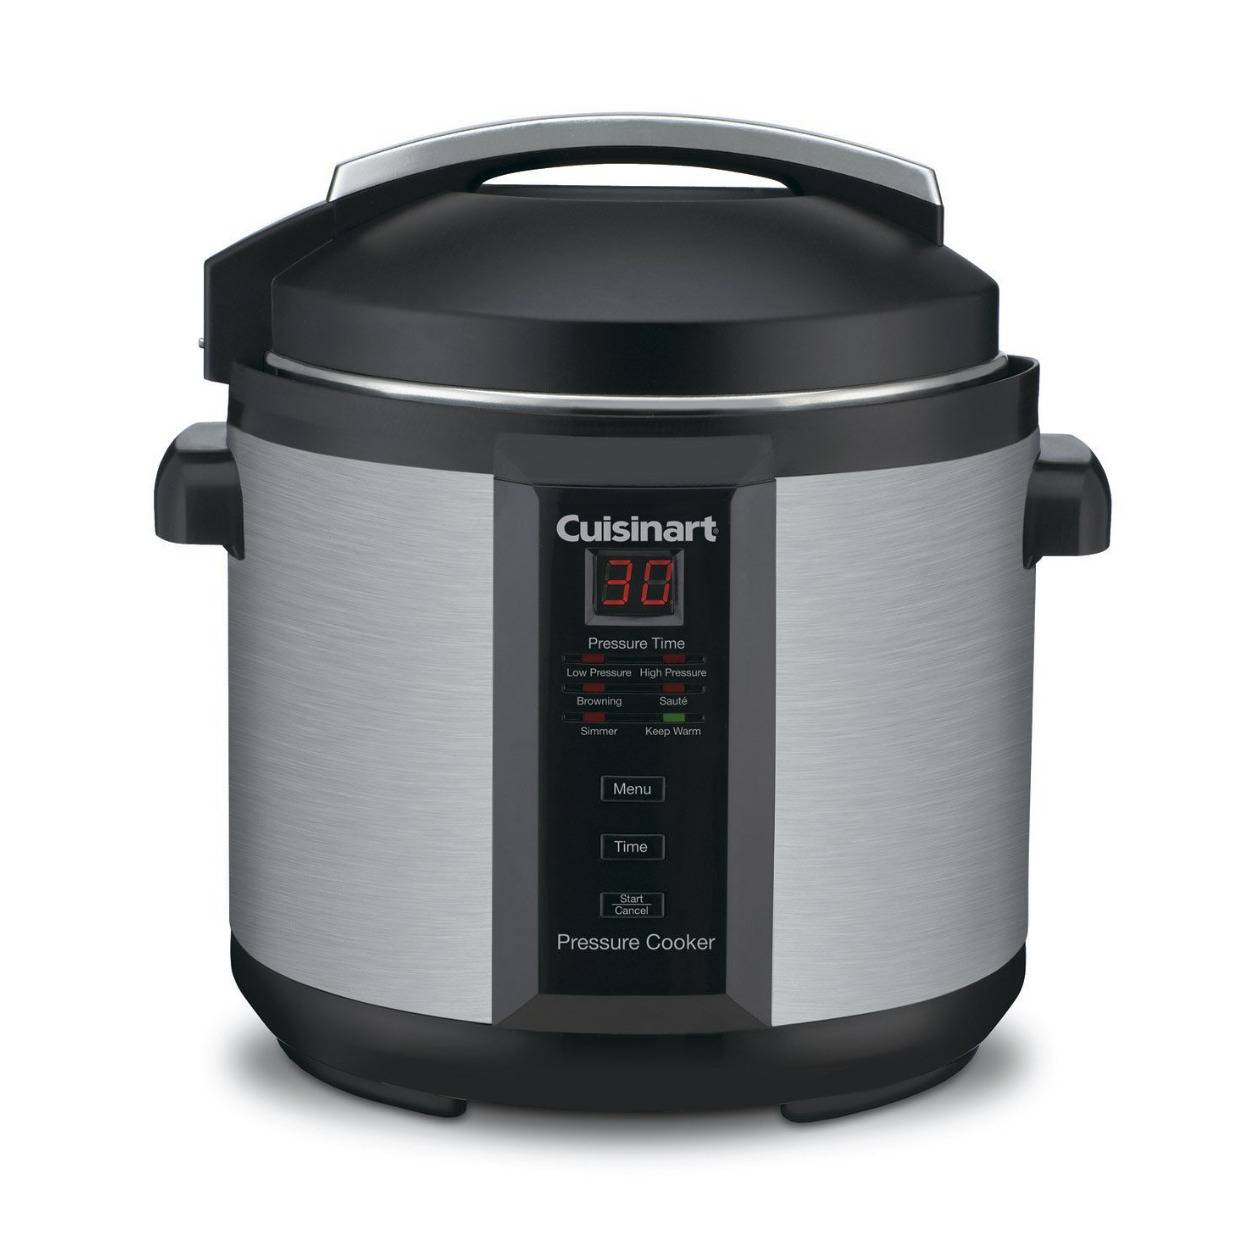 Cuisinart CPC-600 6-Quart Electric Pressure Cooker (Black/Silver)